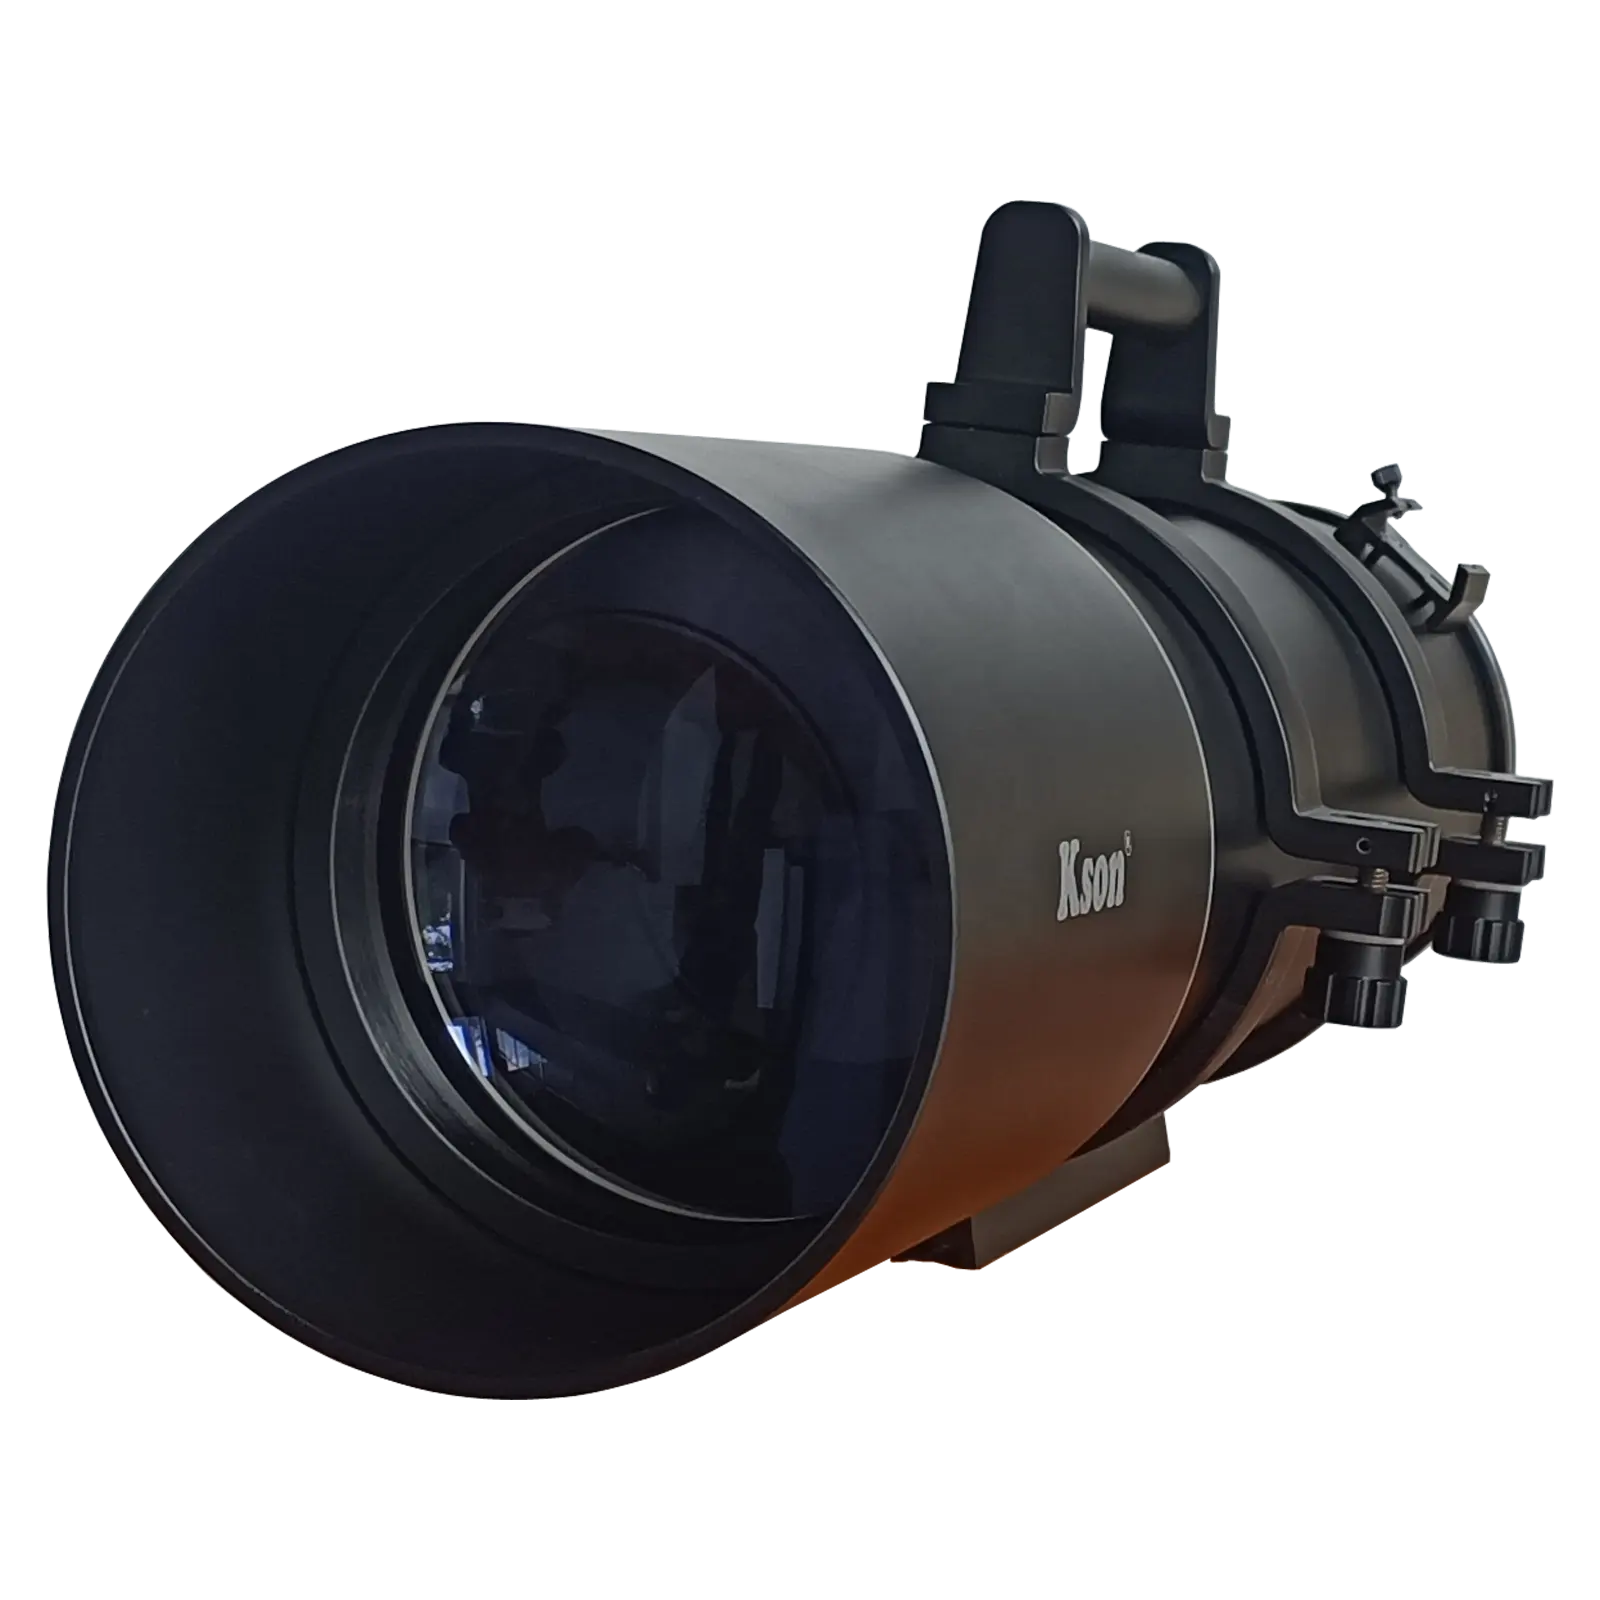 Tubo óptico de alta resolución para telescopio, dispositivo óptico de alta definición con Refractor acromático de tubo óptico